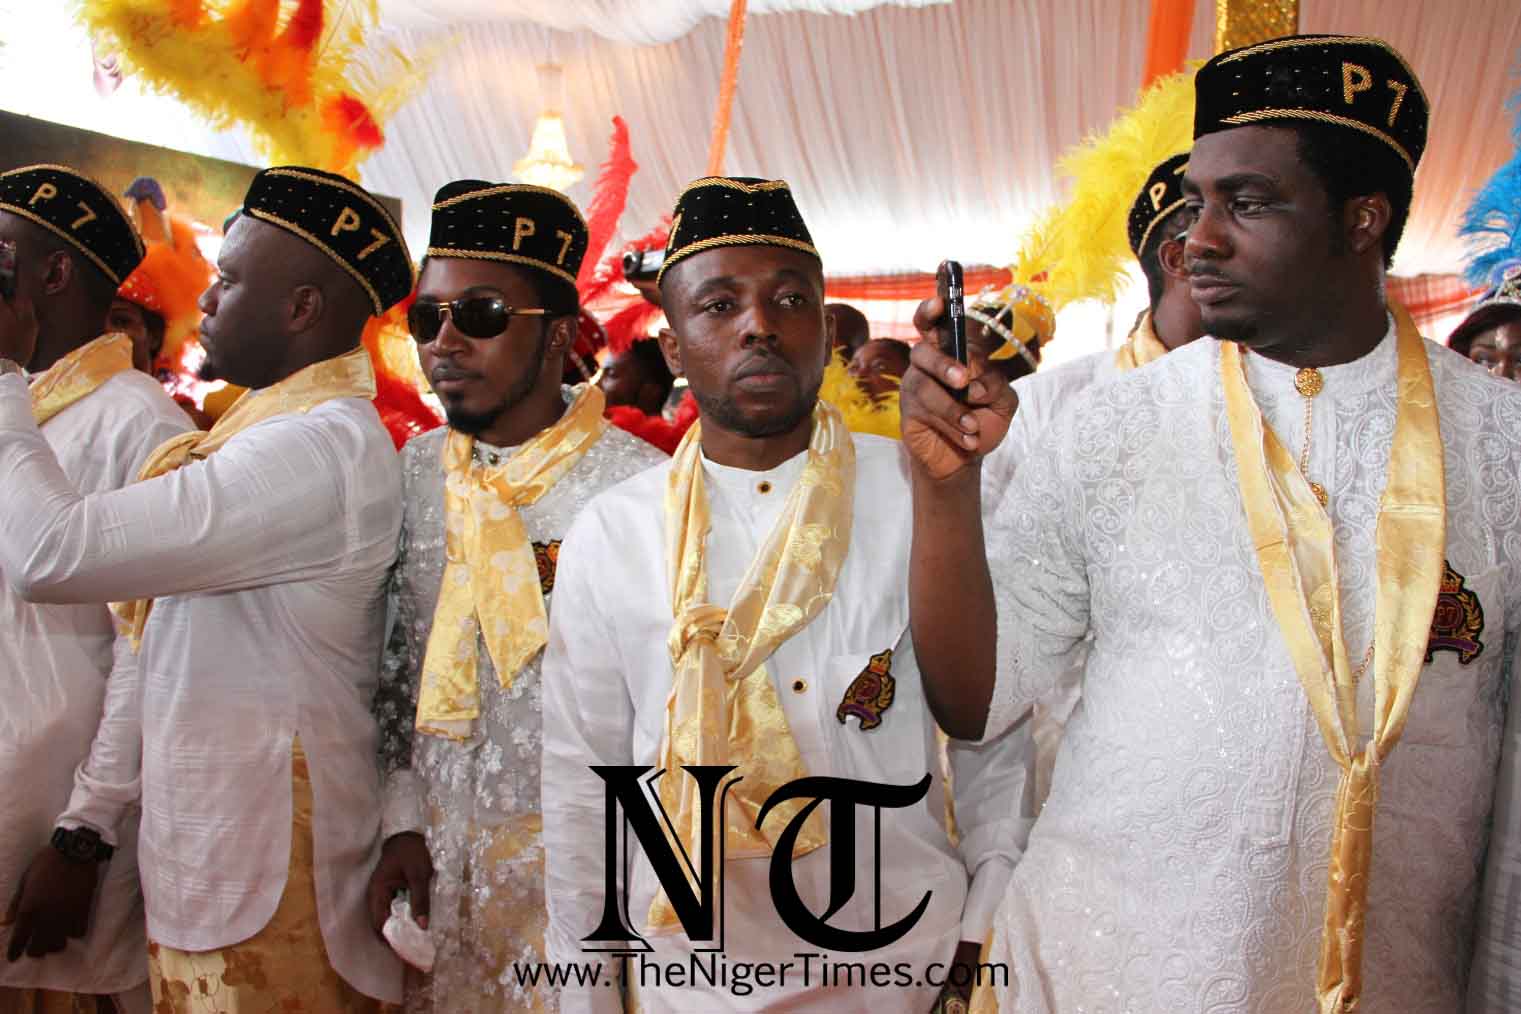 The-niger-times-godswill-faith-wedding-Traditional-Bayelsa-goddluck-8.jpg